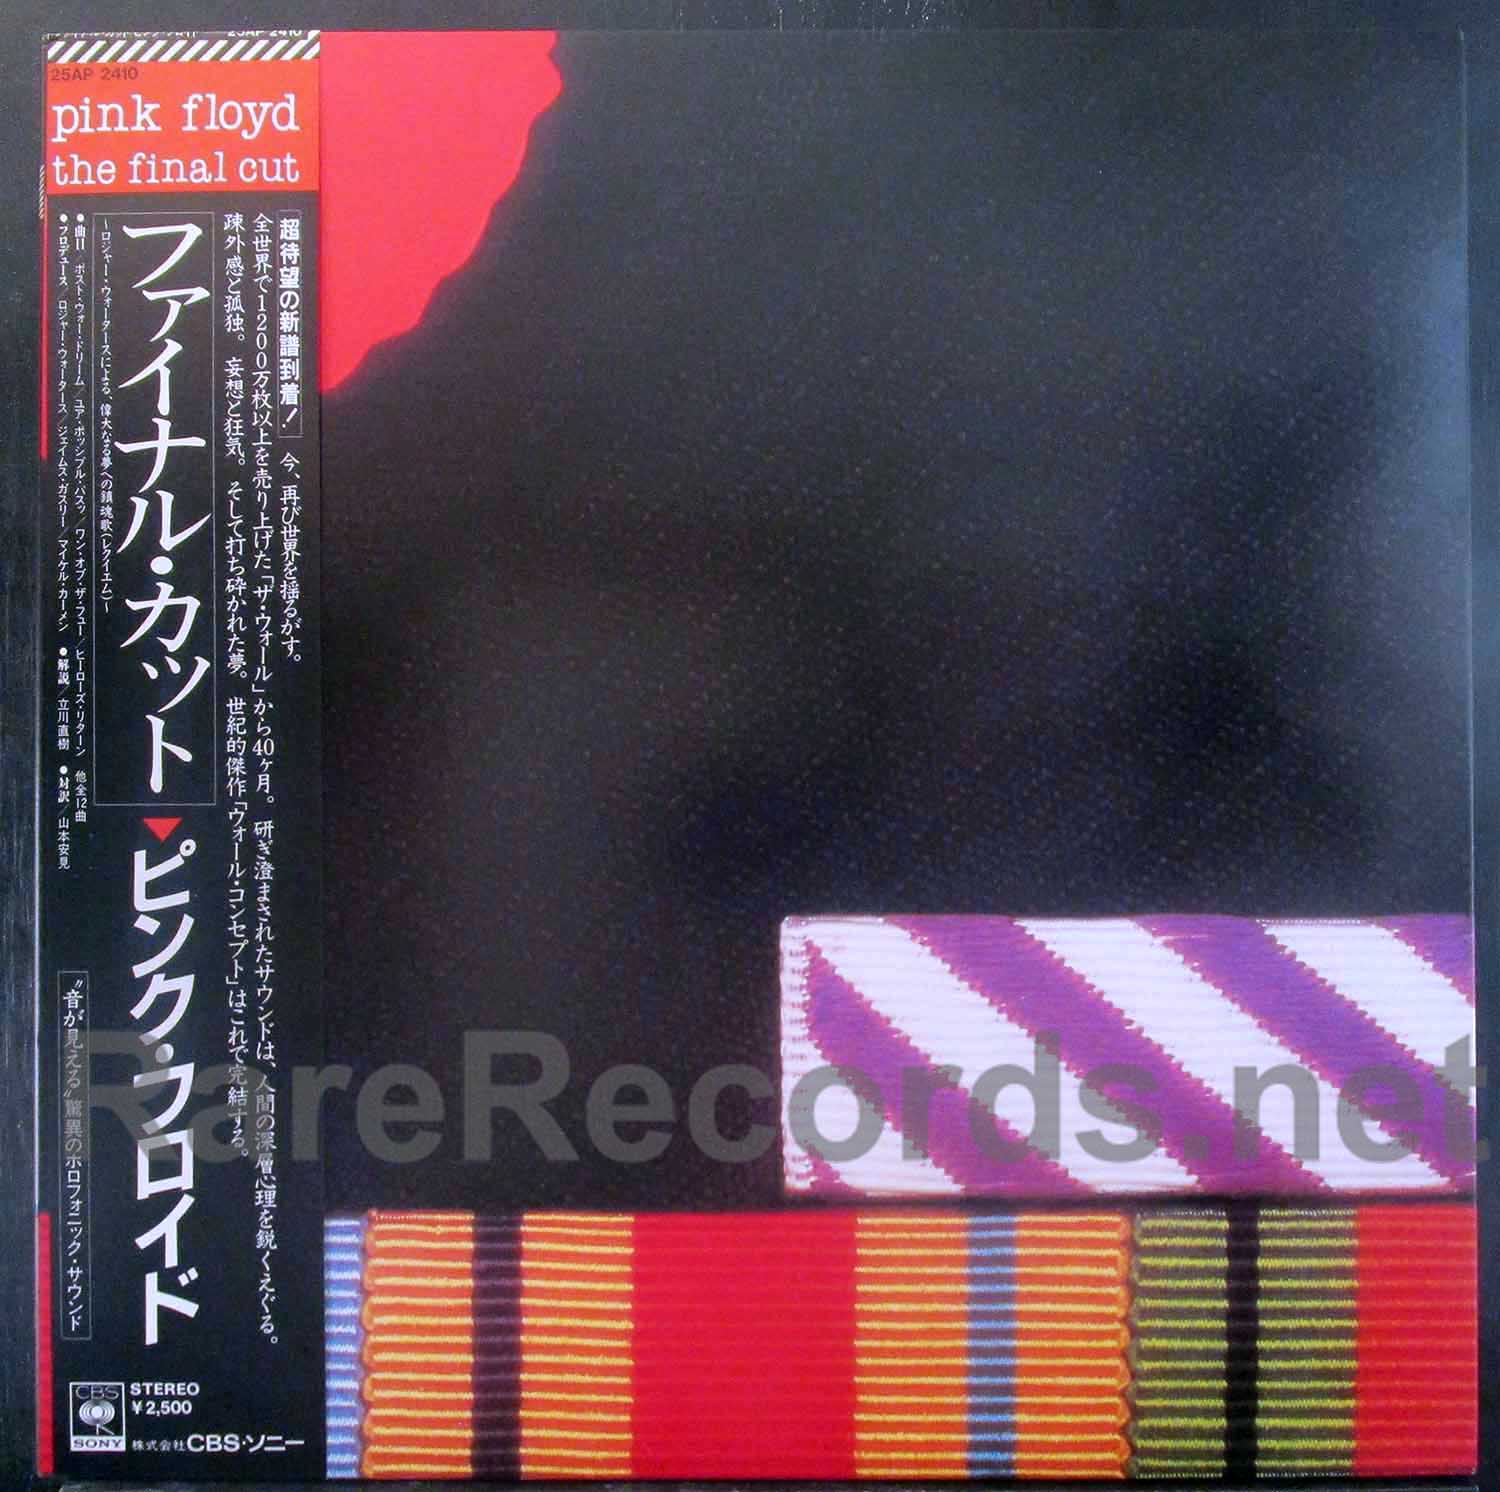 PINK FLOYD /FINAL CUT JAPAN ISSUE LP W/ OBI, INNER, INSERT 